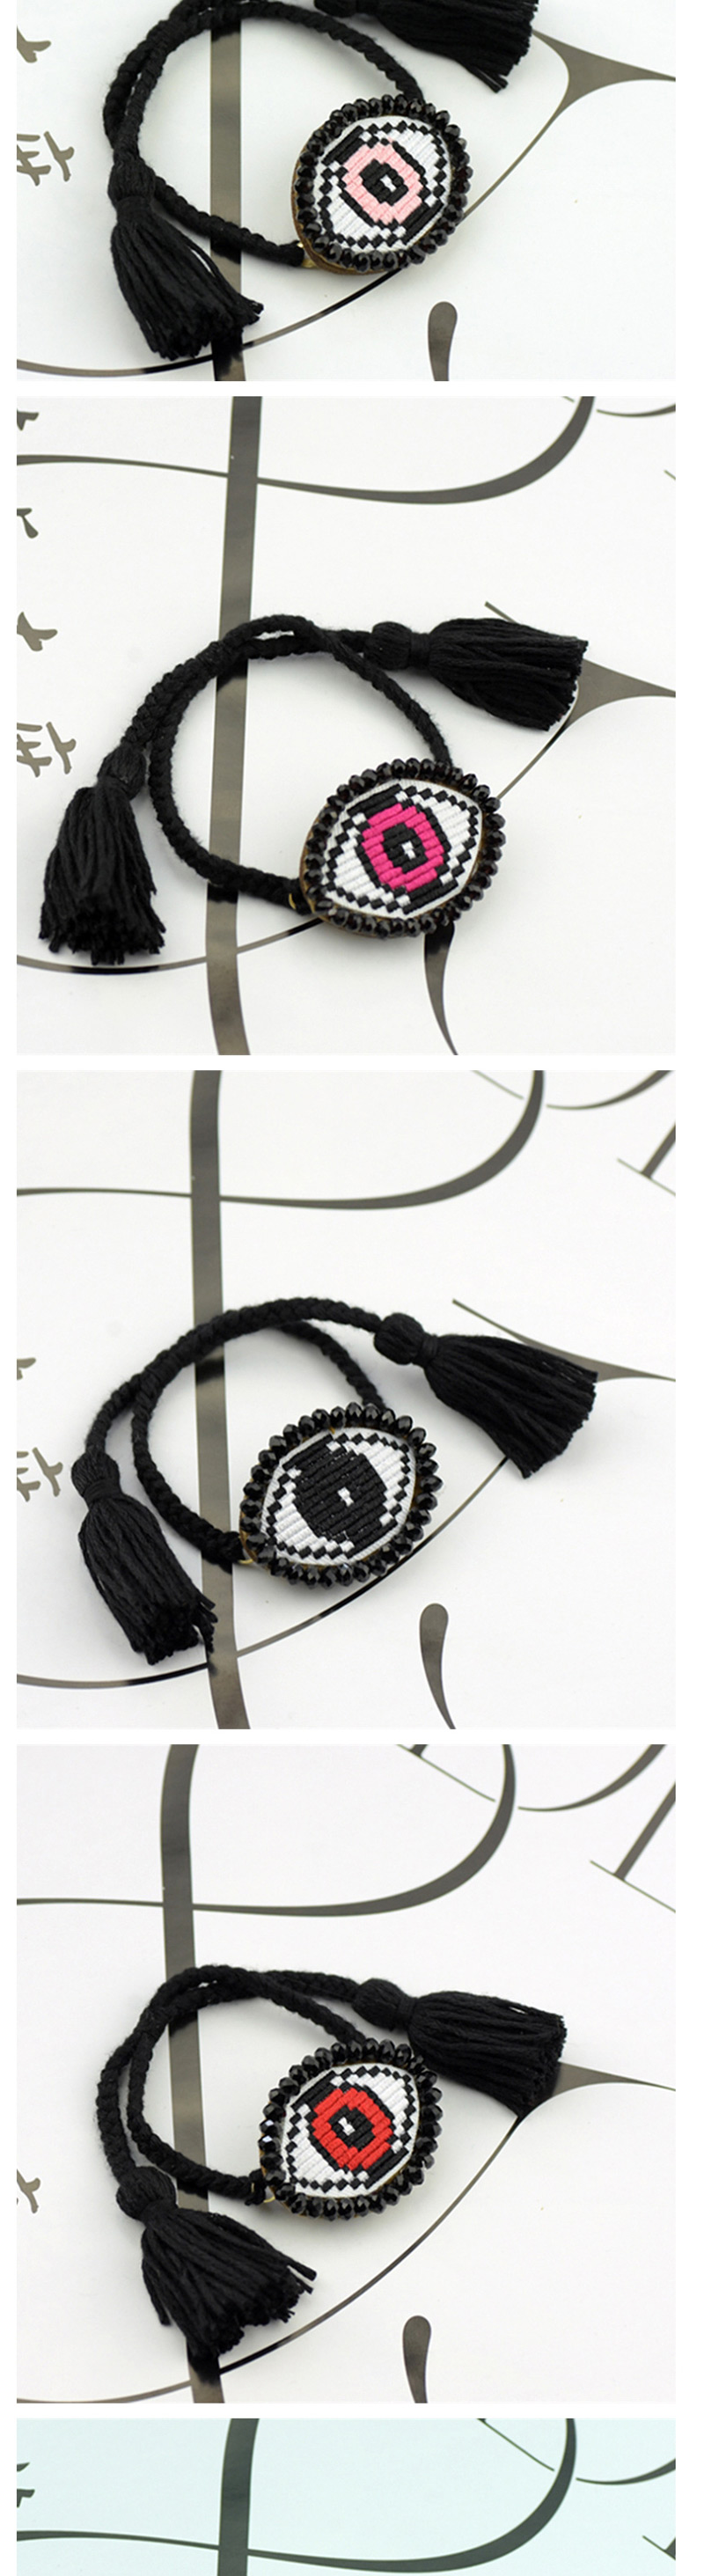 Fashion Black Rope Red Eye Embroidered Crystal Eye Multi-layer Bracelet,Fashion Bracelets